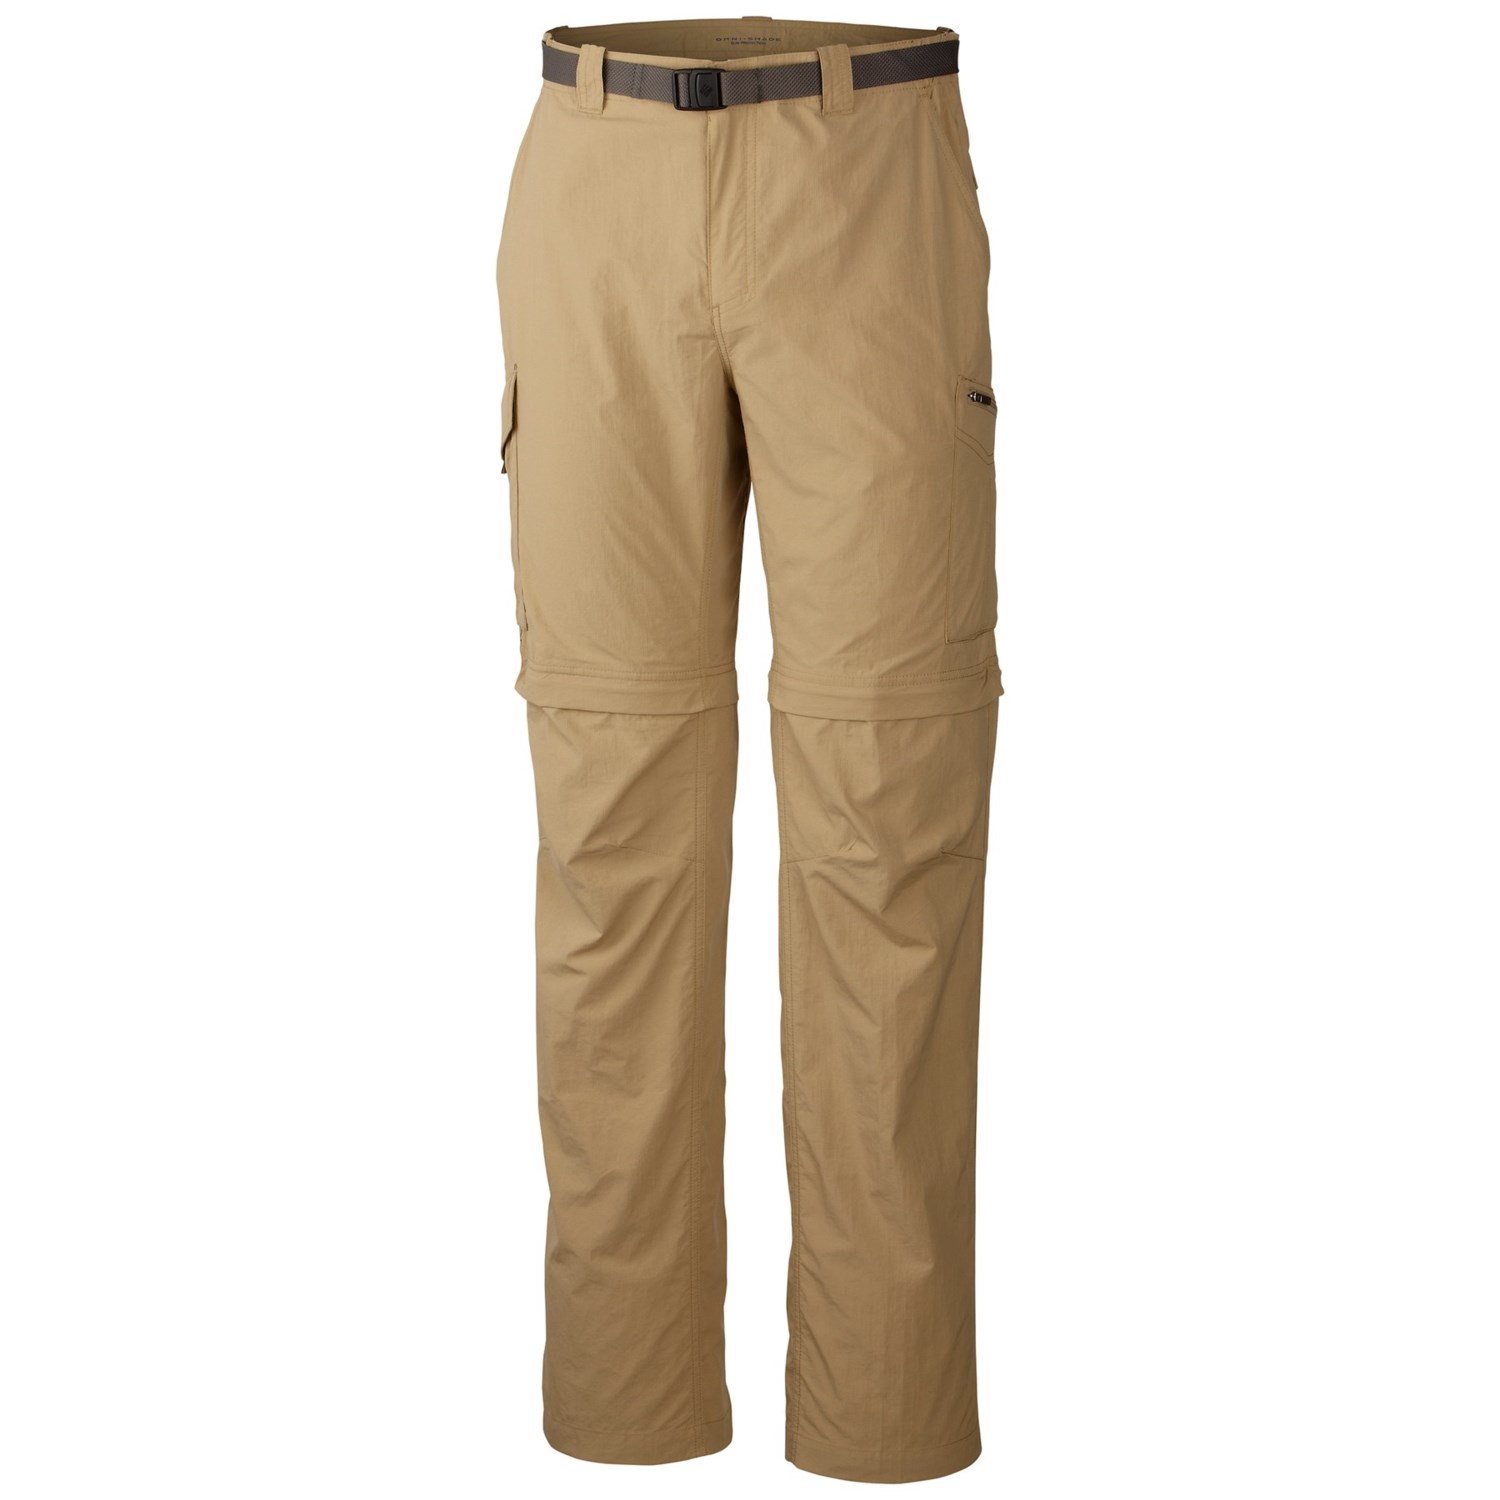 Columbia Sportswear Silver Ridge Convertible Pants - UPF 50 (For Men